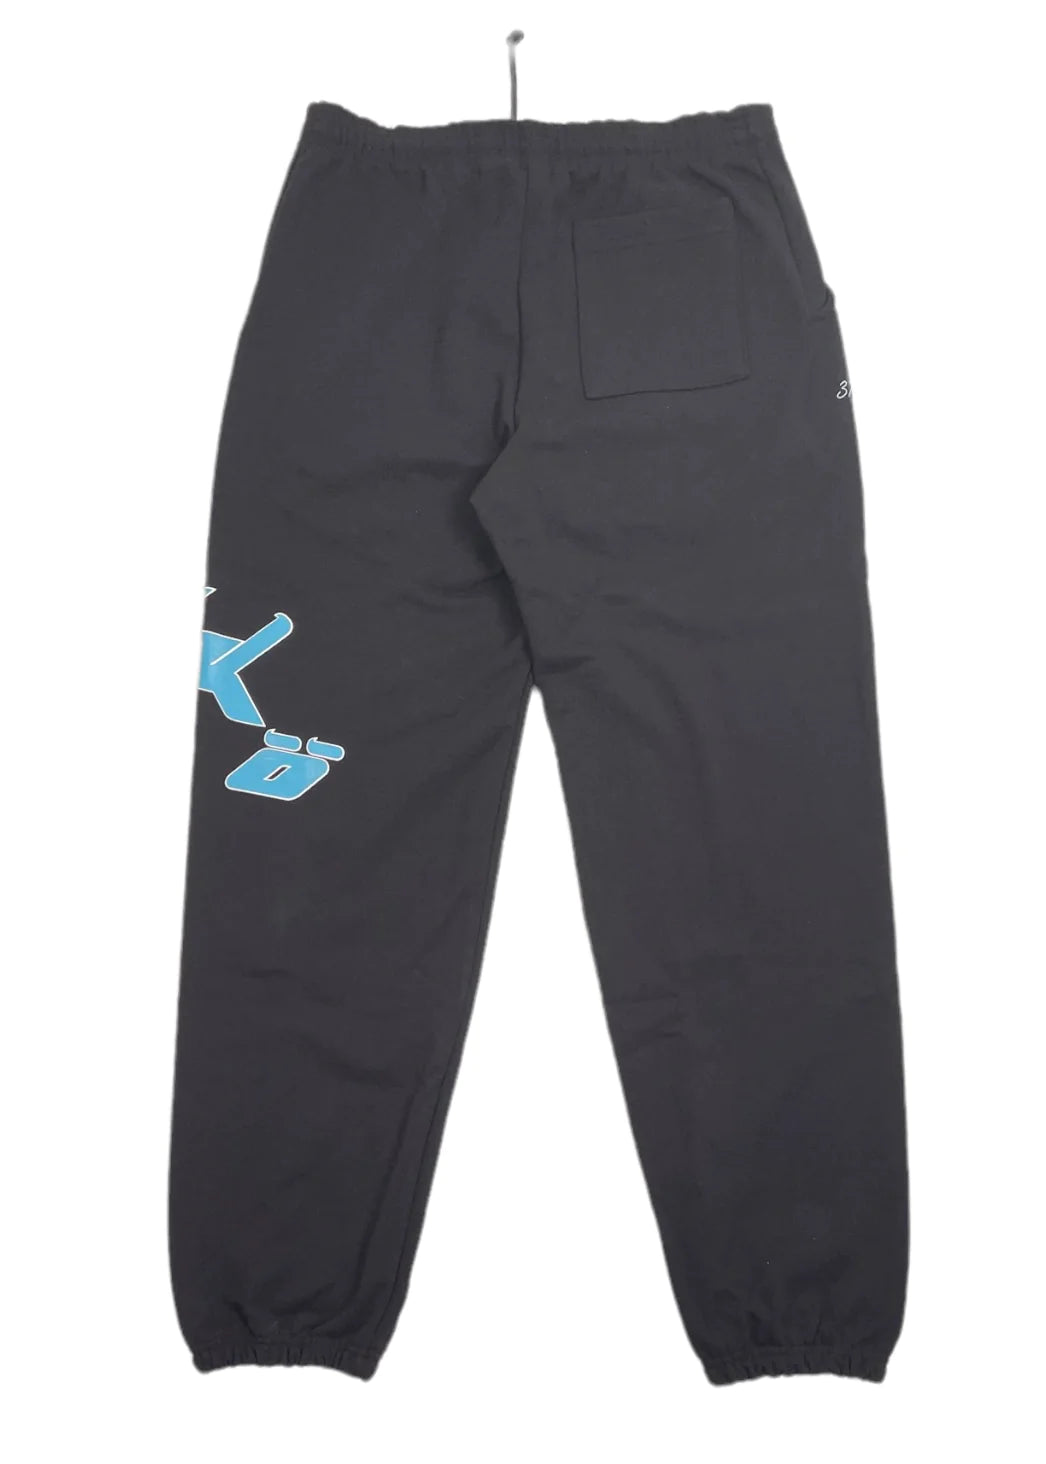 Sicko 'BornFromPain' Showroom Sweatpants Black/Blue